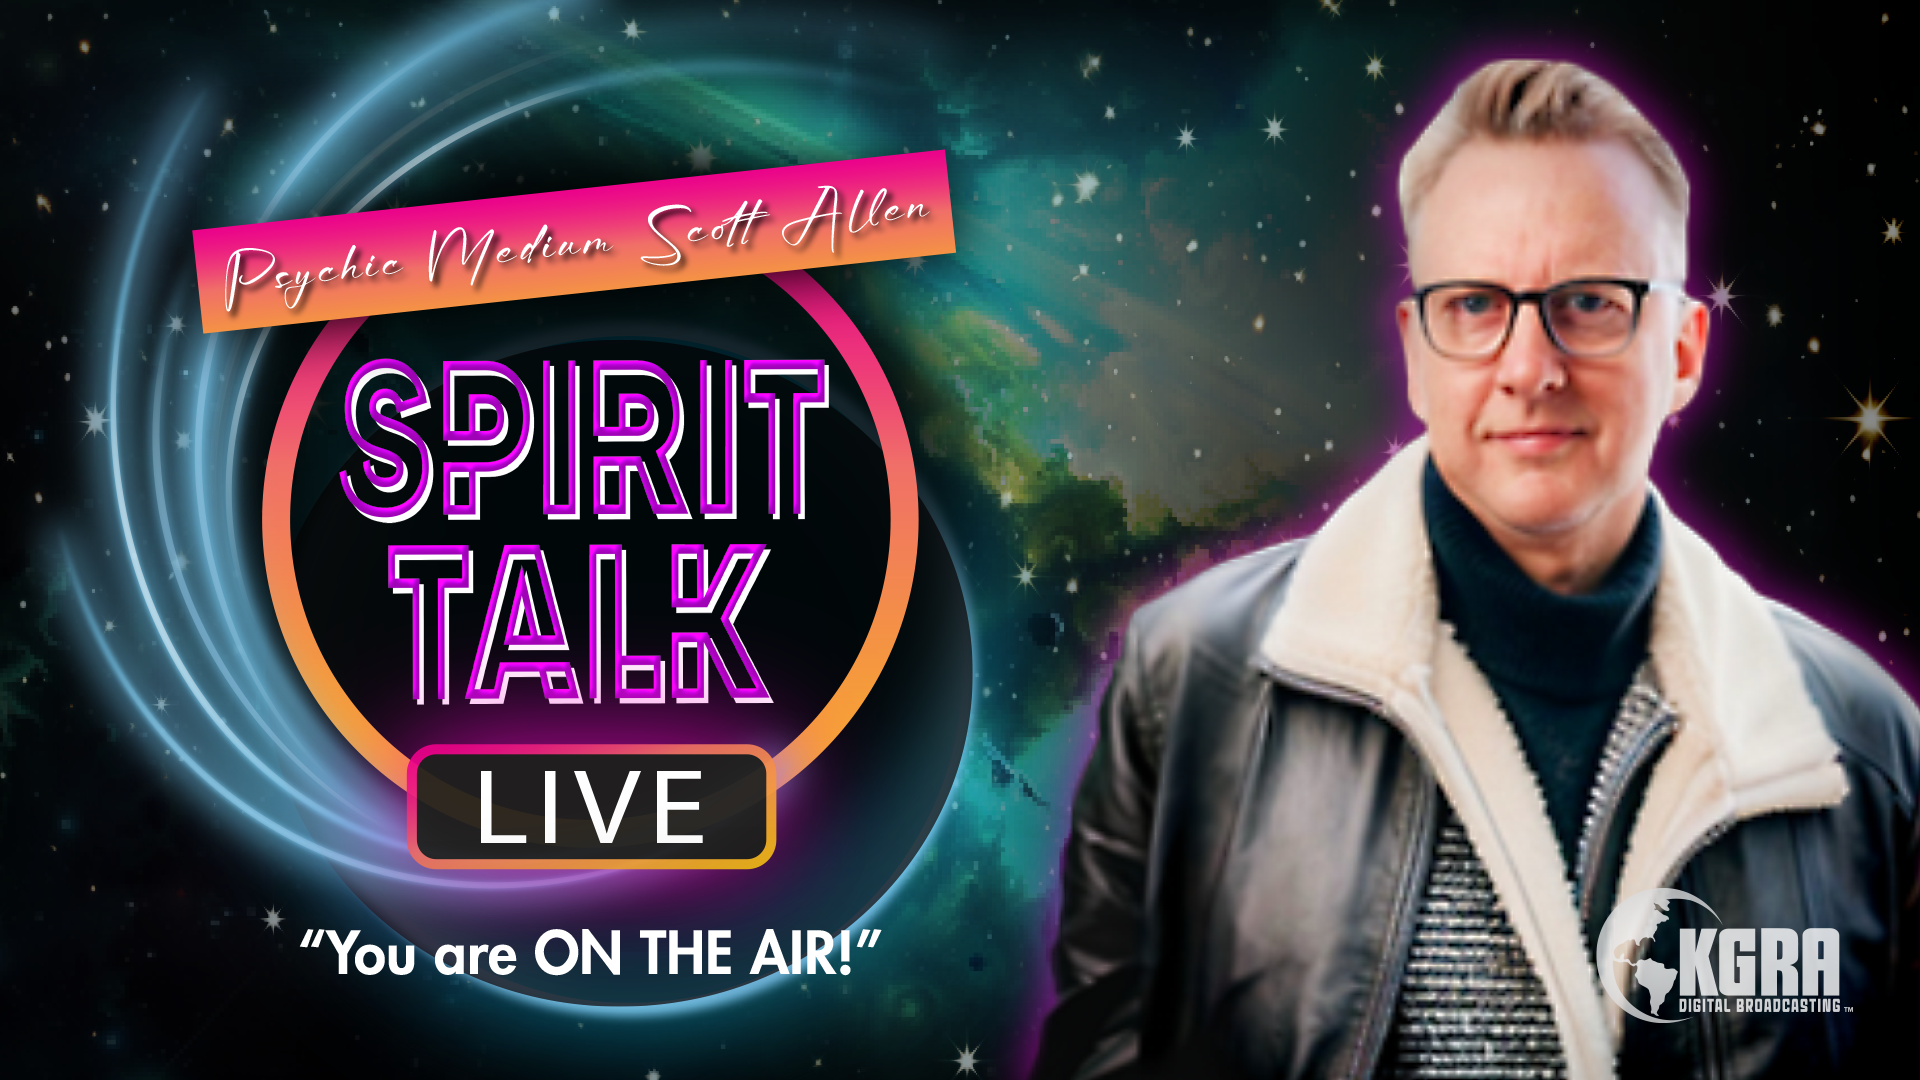 Spirit Talk Live - KGRA Digital Broadcasting